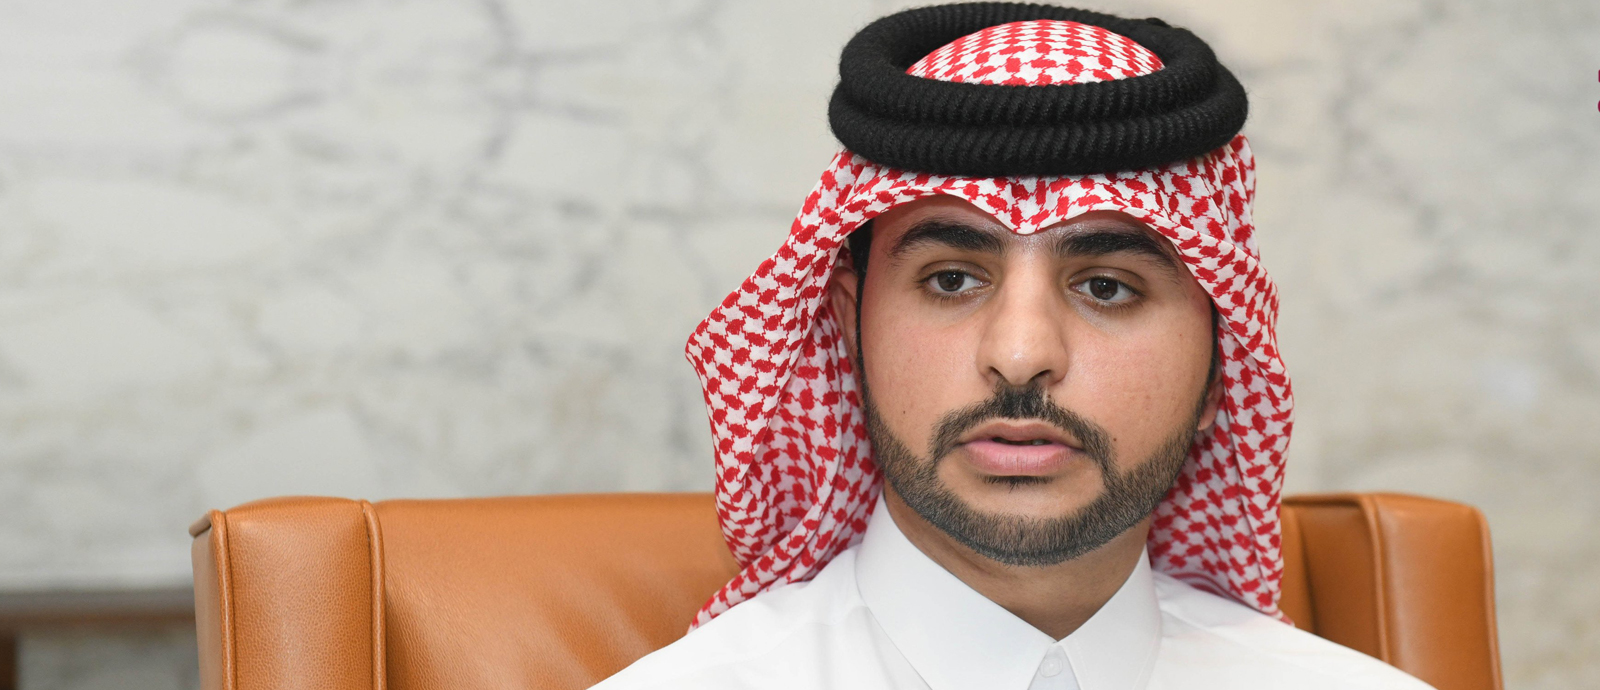  Sheikh Mohammed bin Fahad Al-Thani